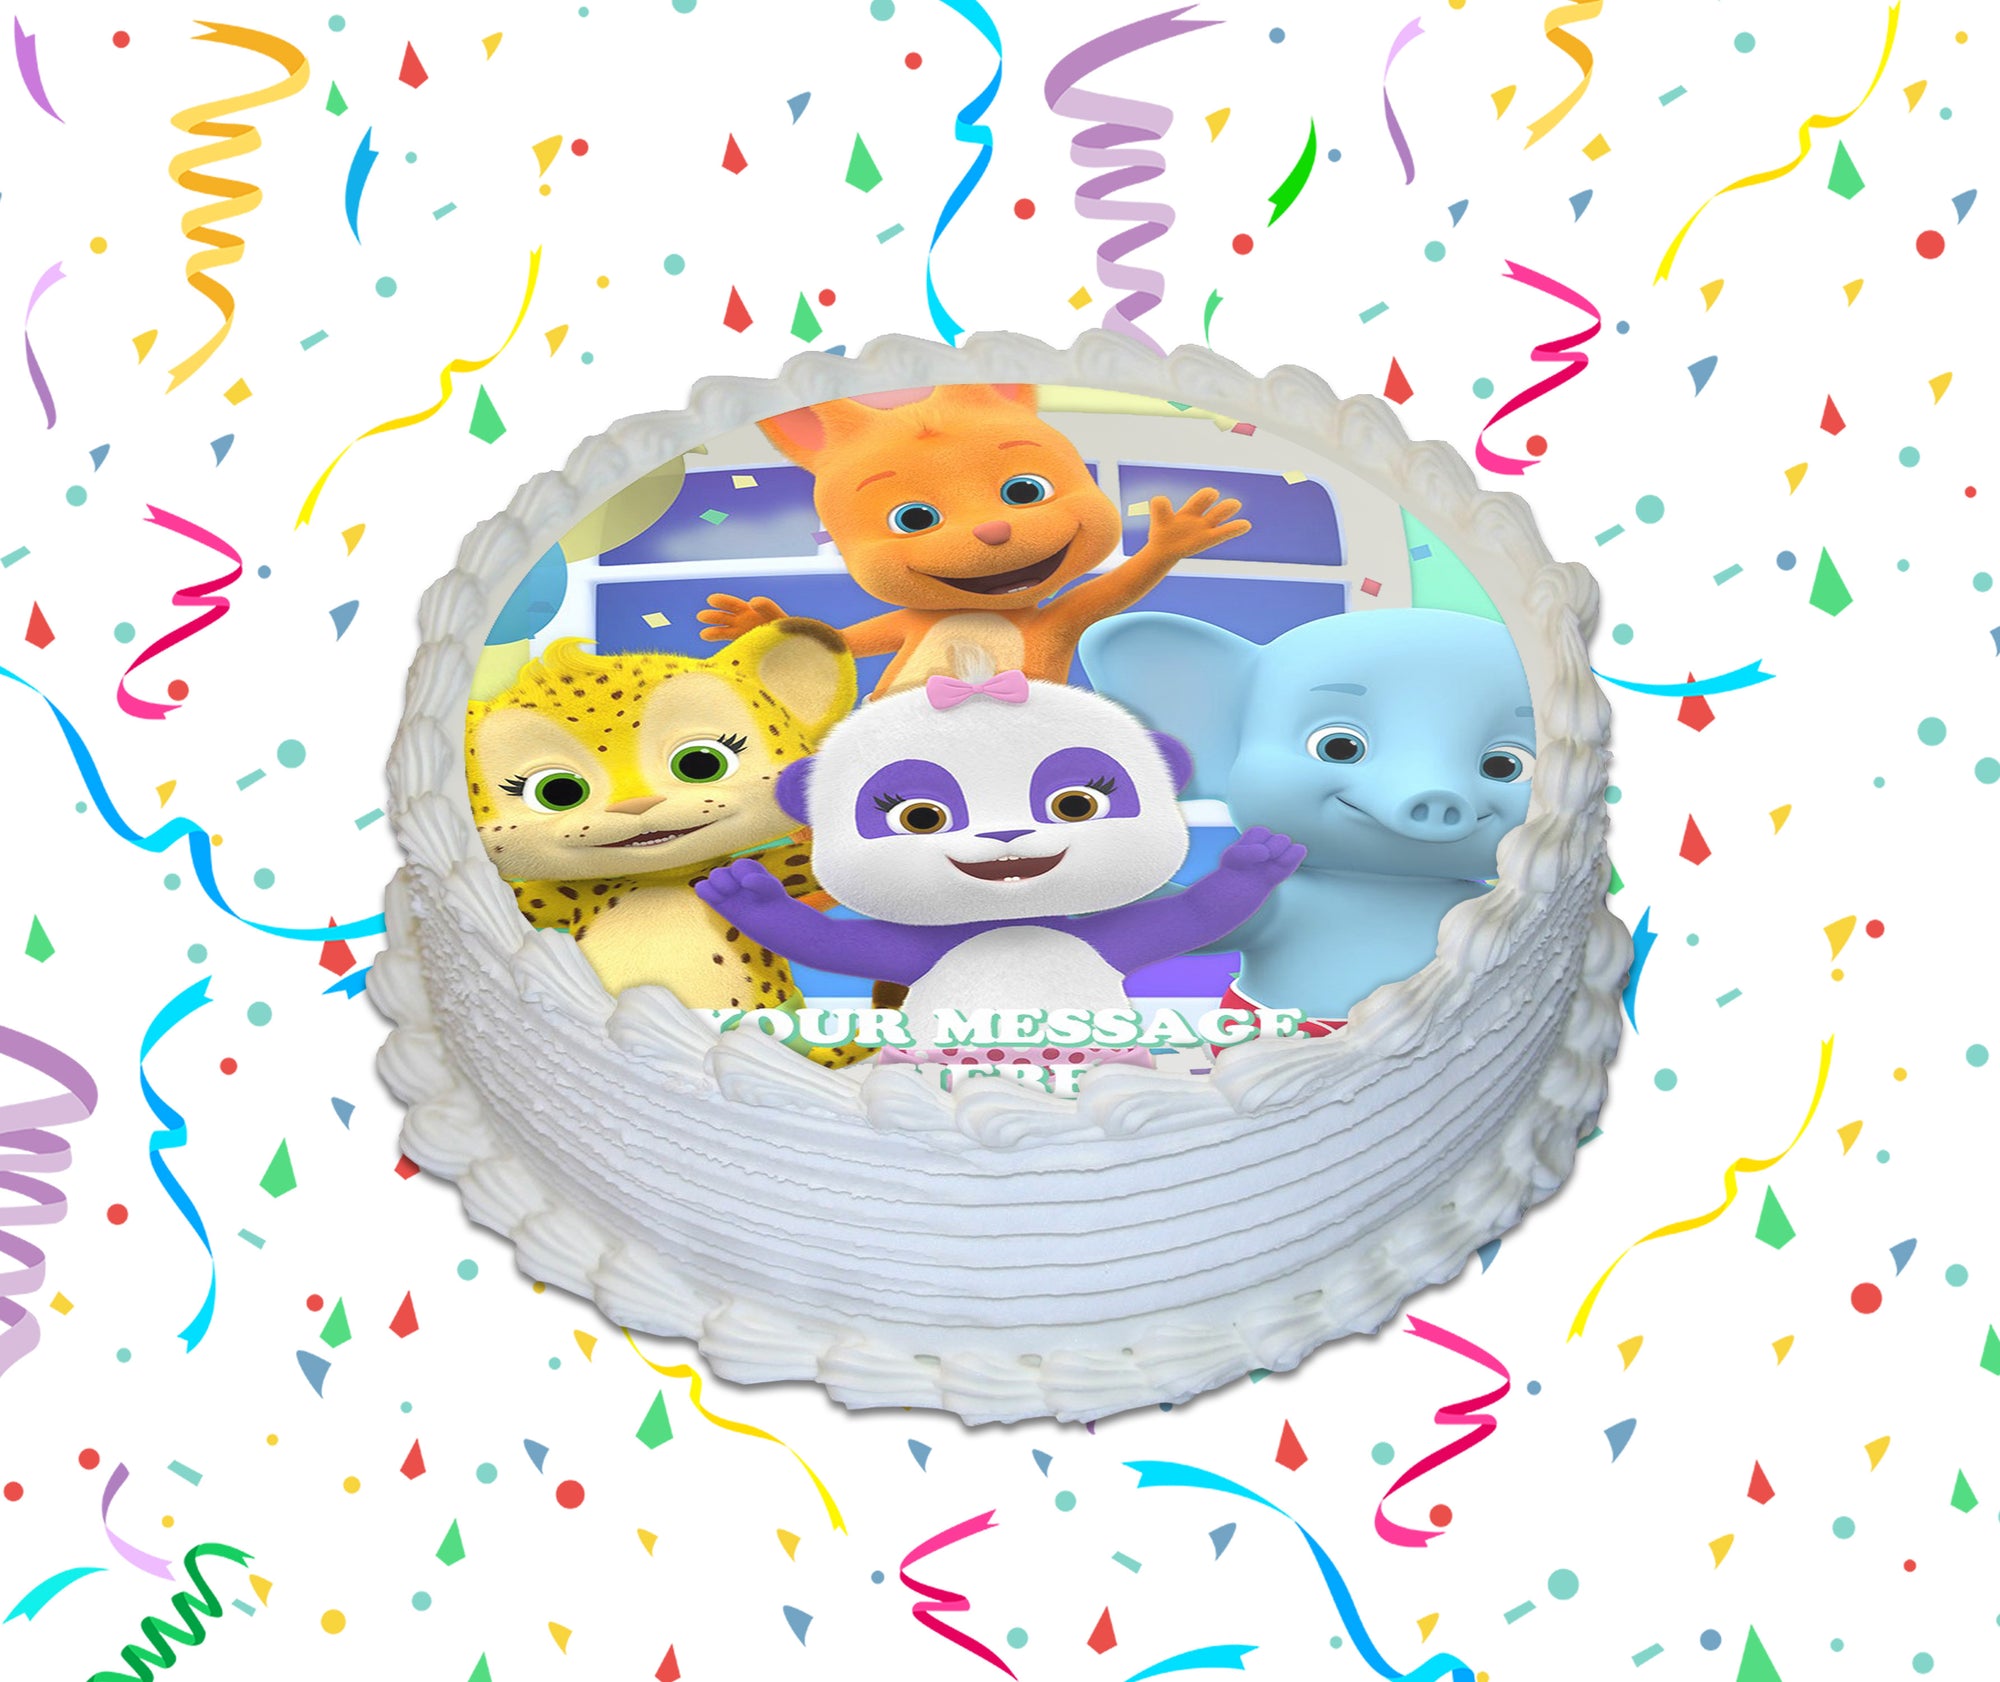 Personalized Birthday Cake Topper Happy Birthday Cake Topper